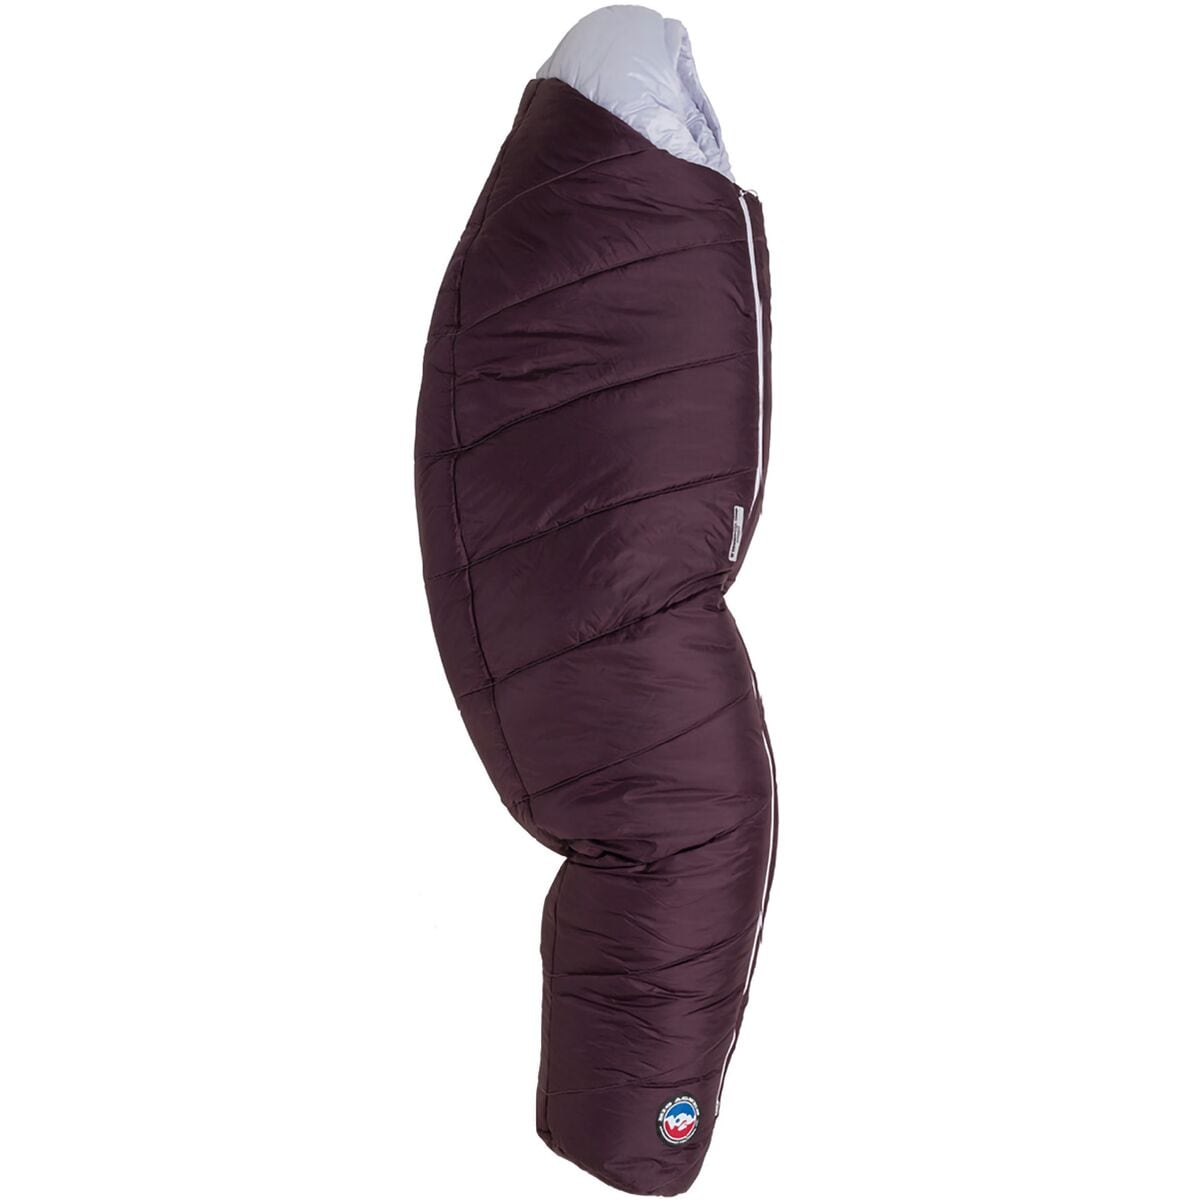 Sidewinder Camp Sleeping Bag: 35F Synthetic - Women